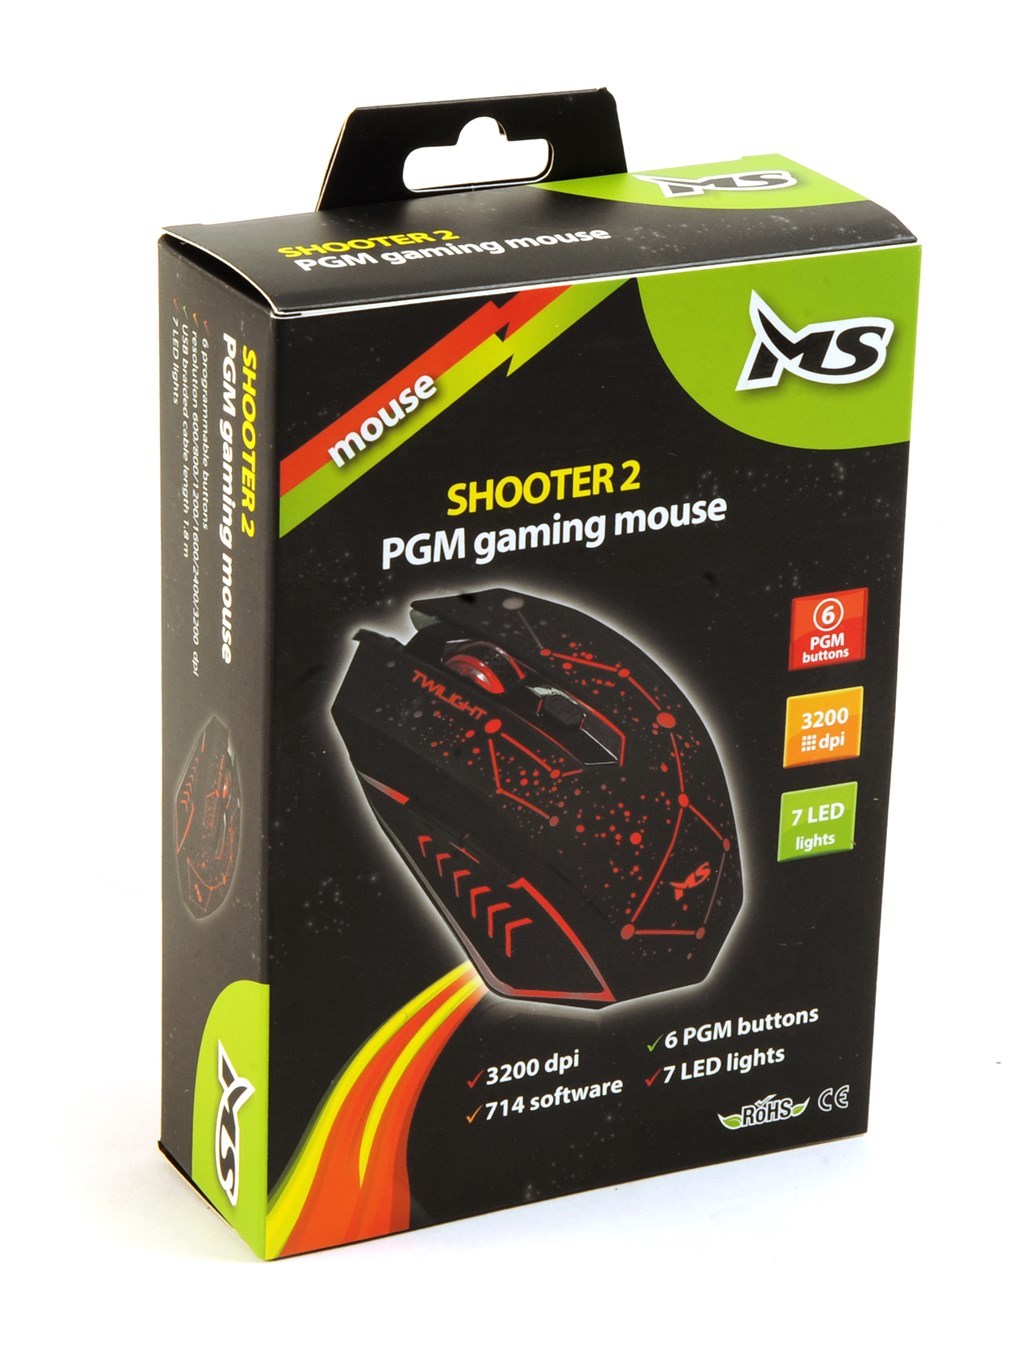 Miš MSI SHOOTER 2 gaming